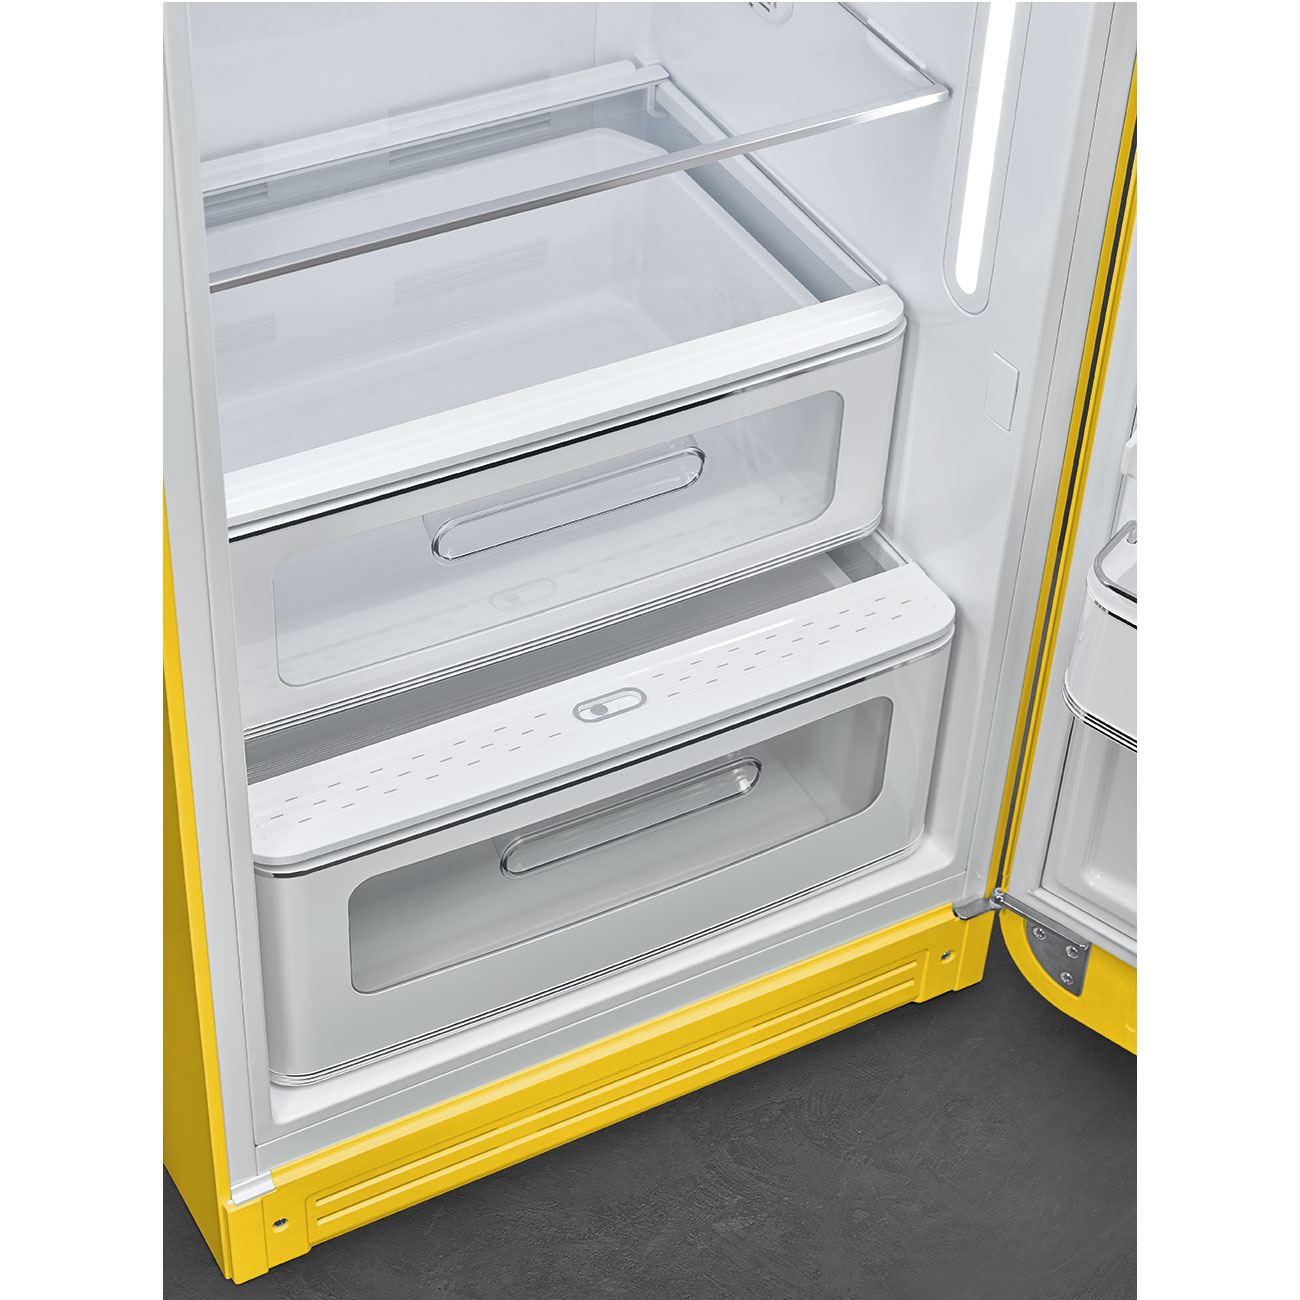 Yellow refrigerator - Smeg_5